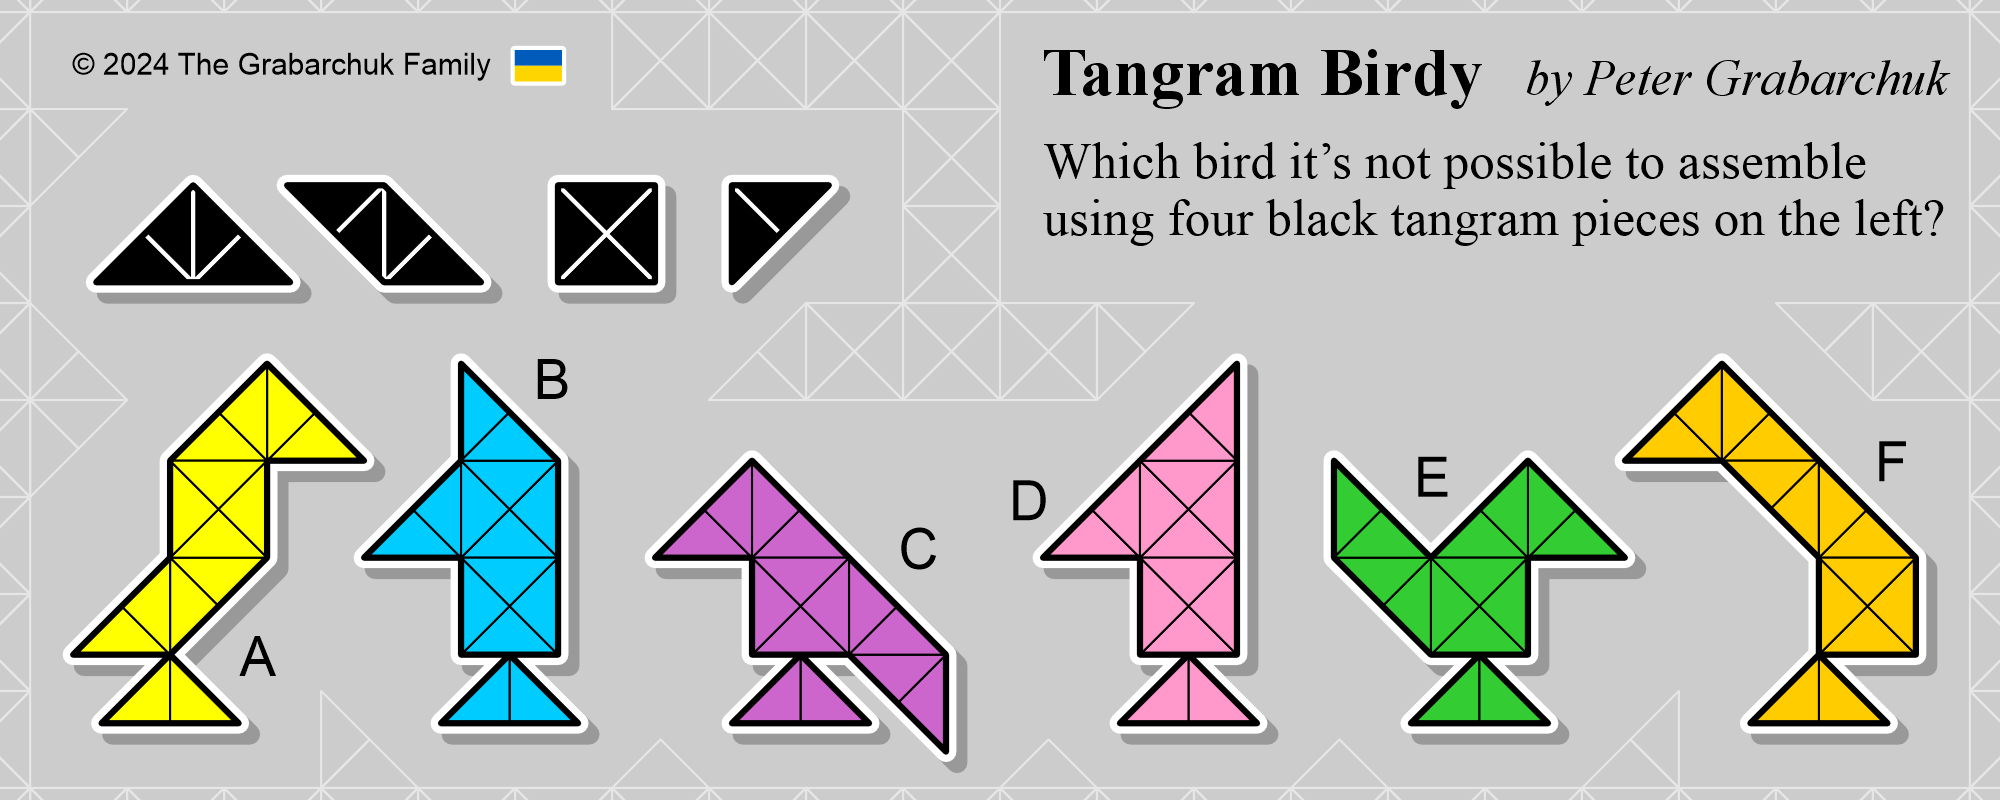 Tangram Birdy by Peter Grabarchuk